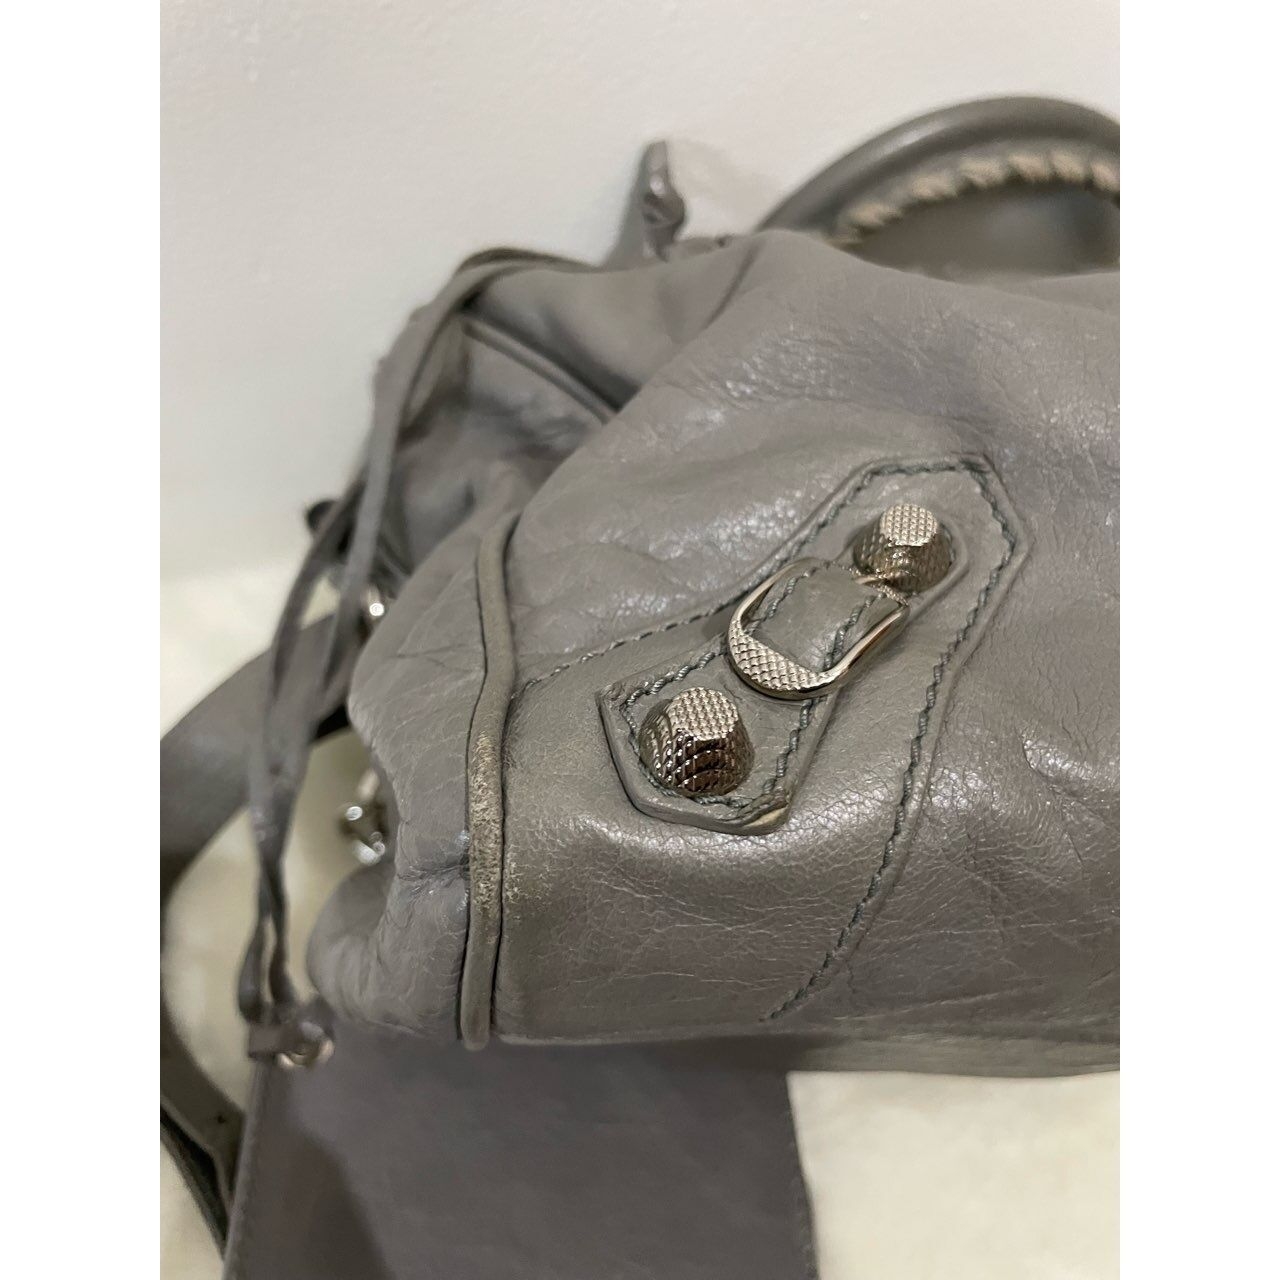 Balenciaga Boston Grey Agneau Giant 12 SHW Handbag